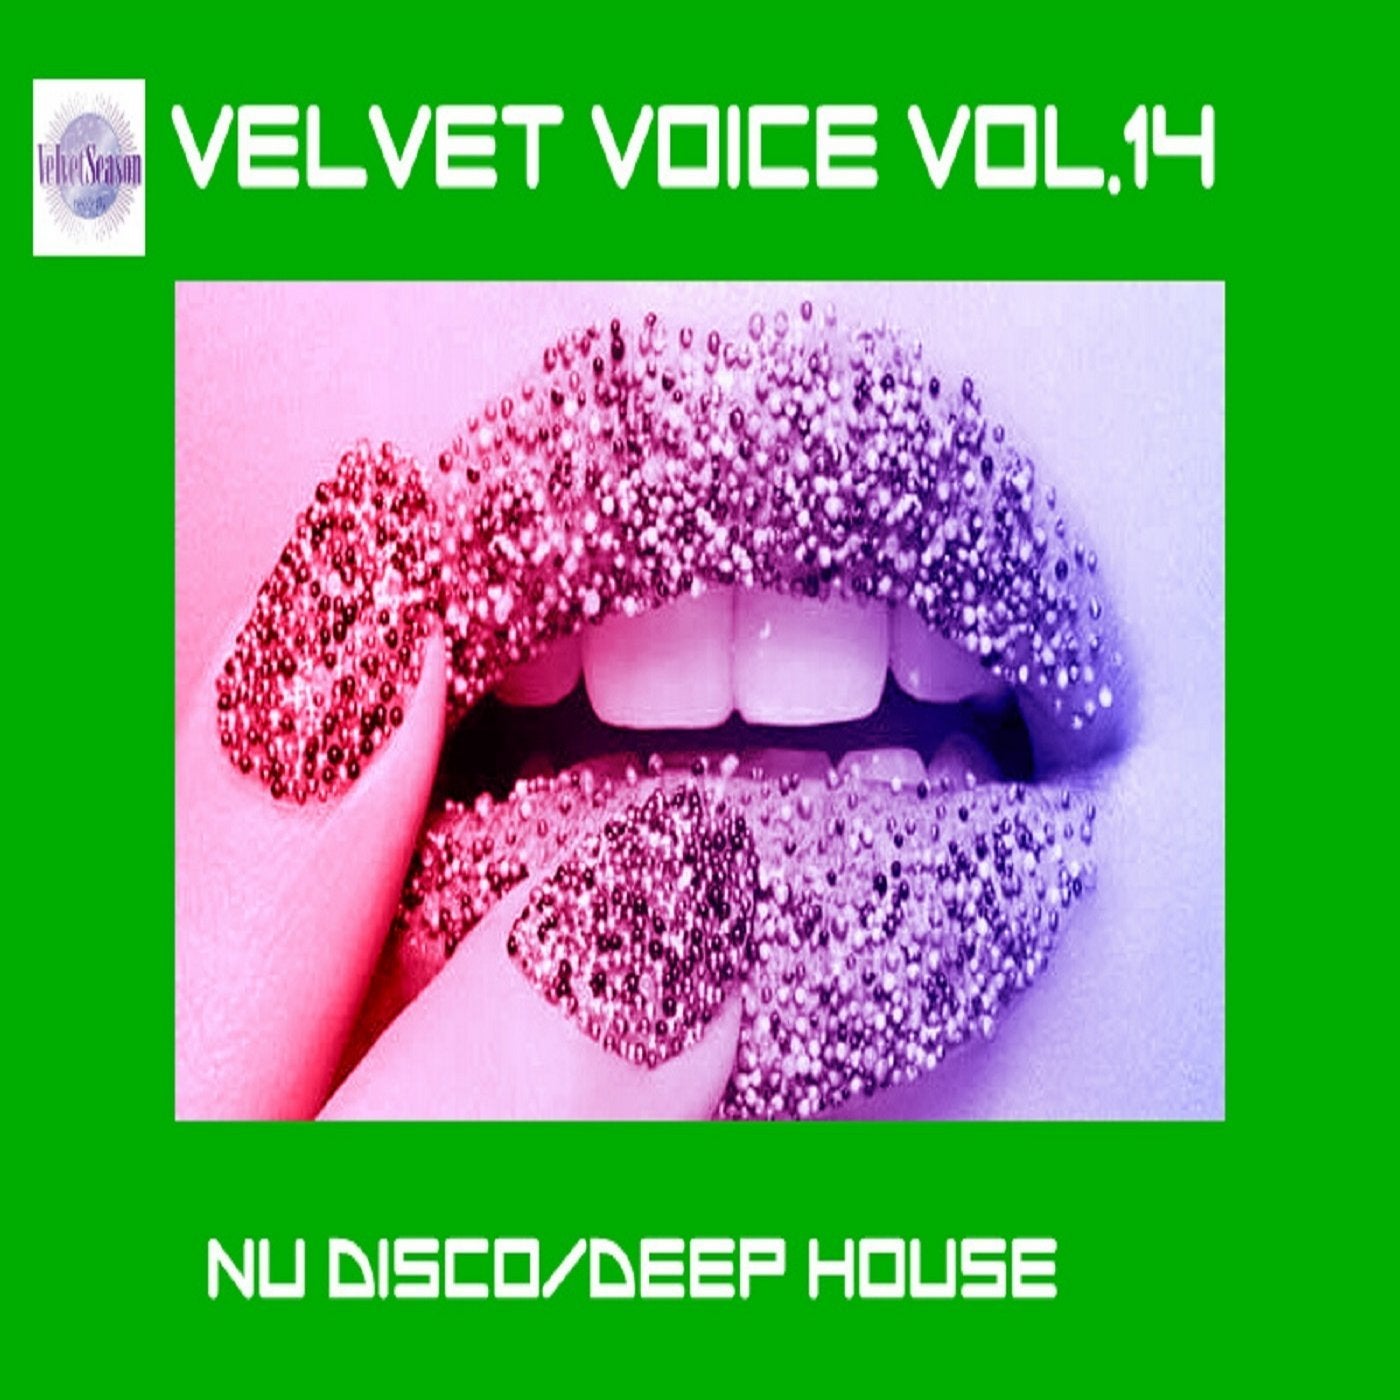 Velvet Voice VOL.14 [Nu Disco/Deep House]